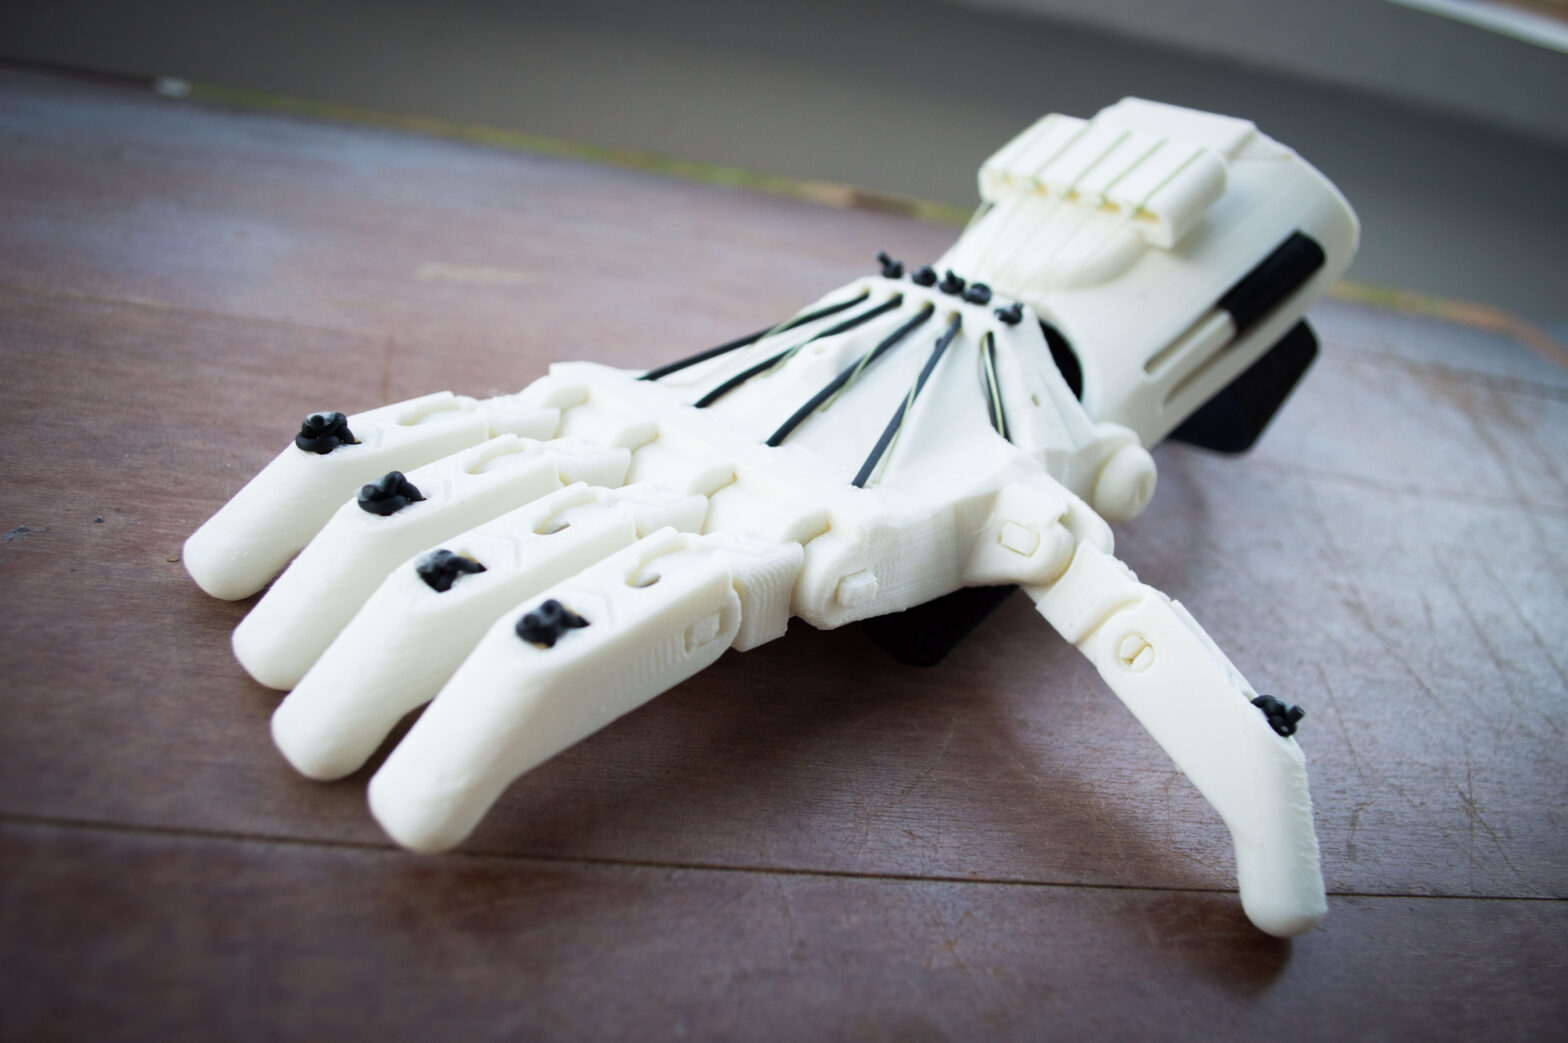 3D Printed Prosthetics Market